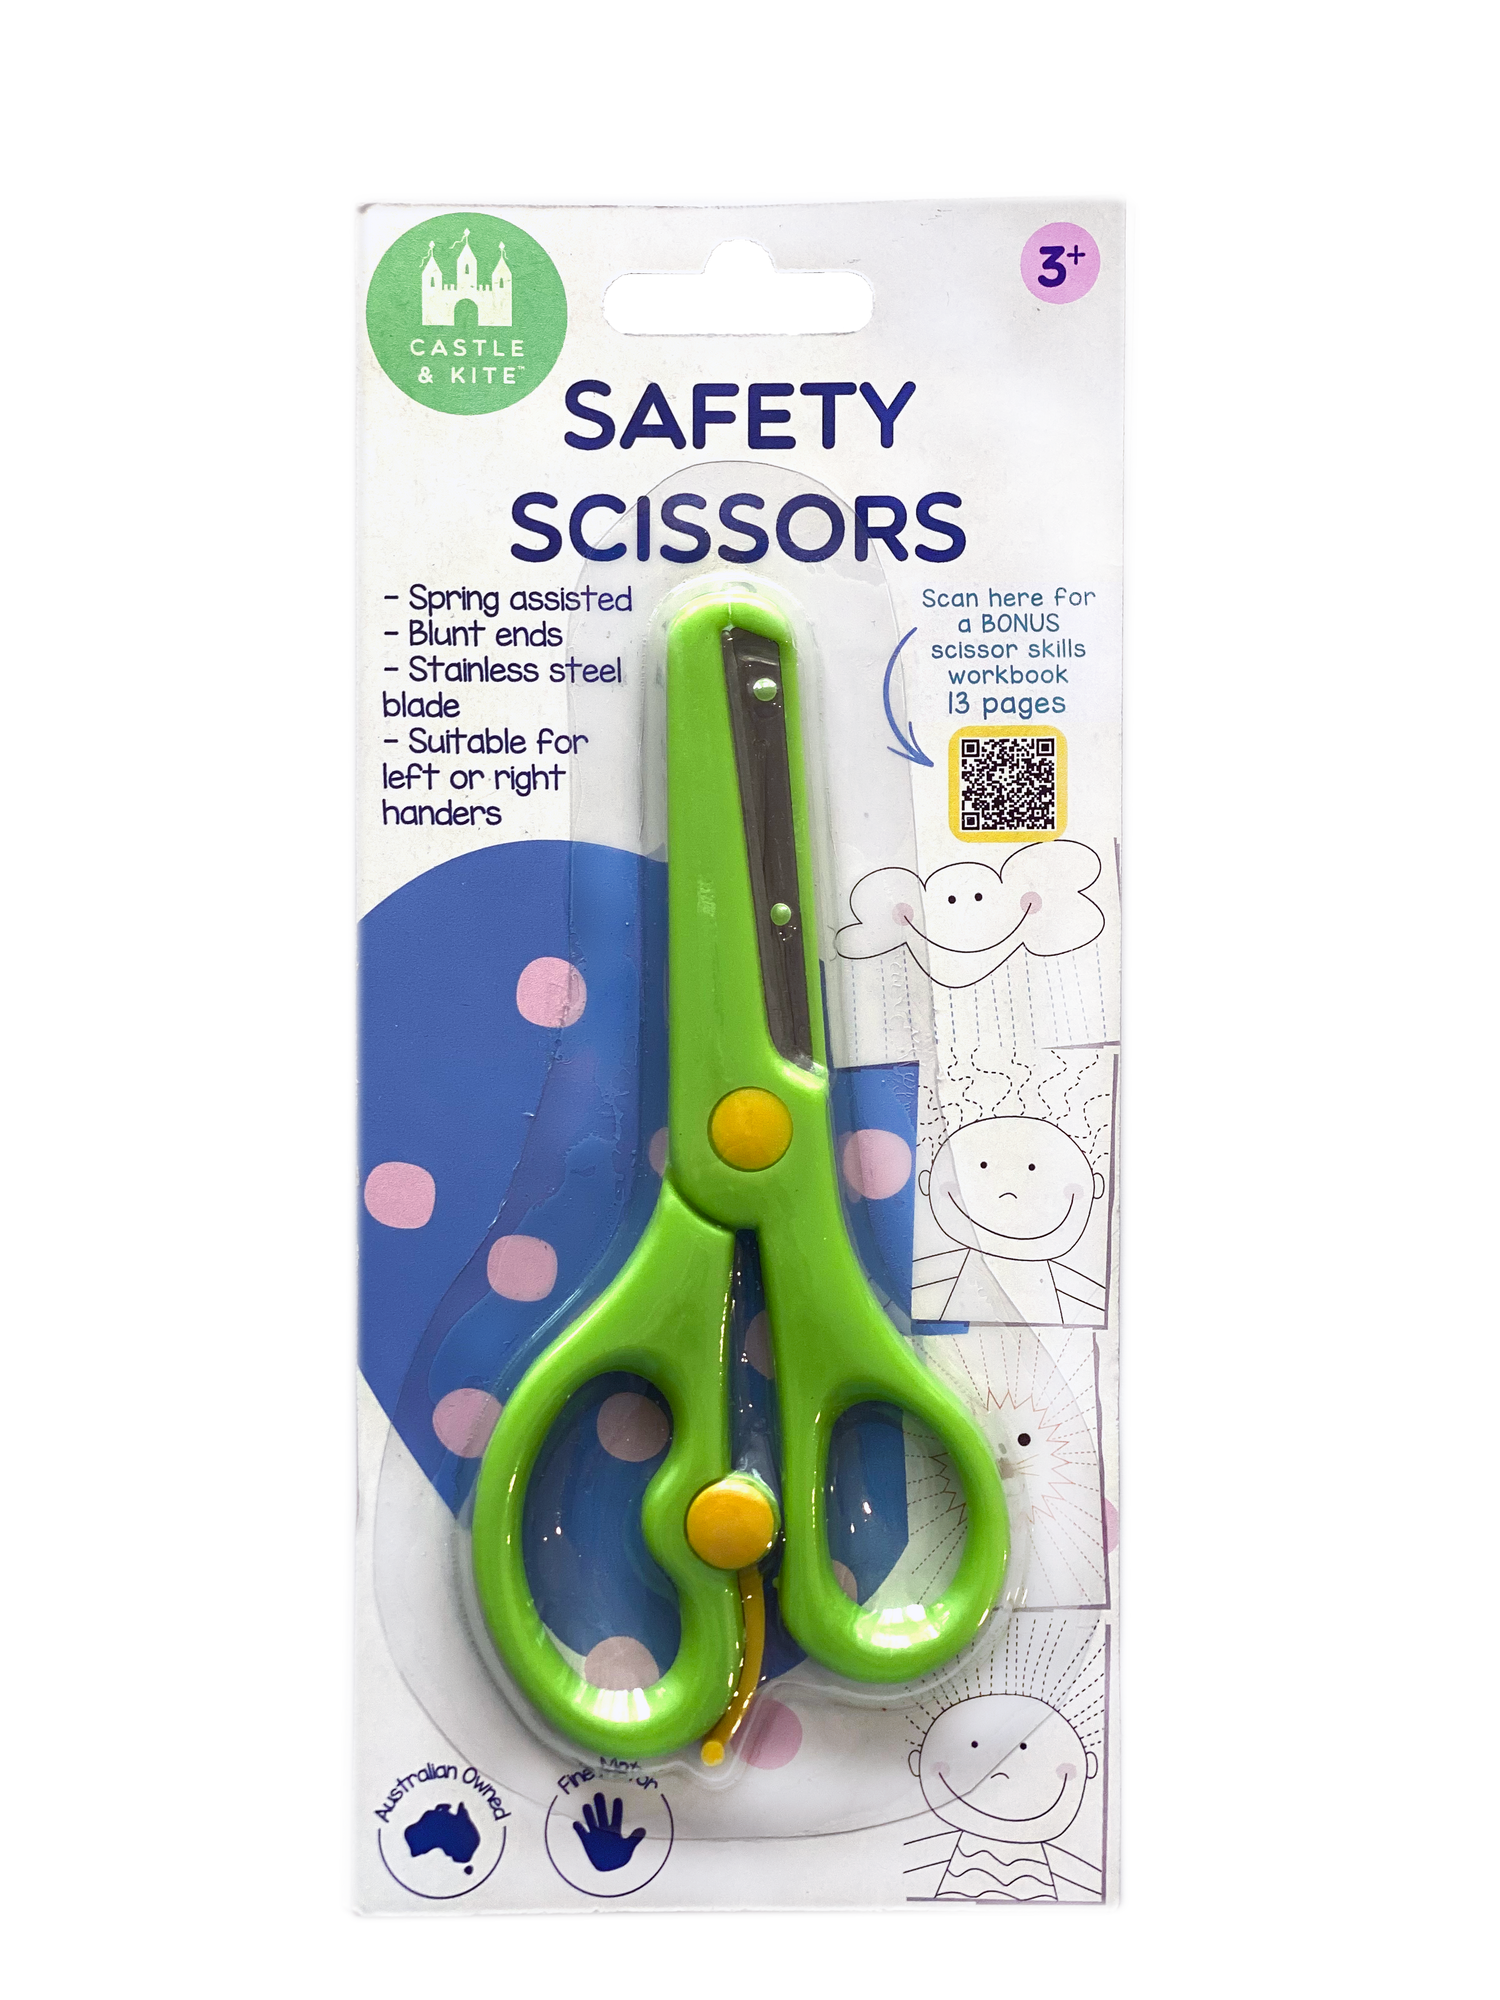 Castle &amp; Kite Safety Scissors